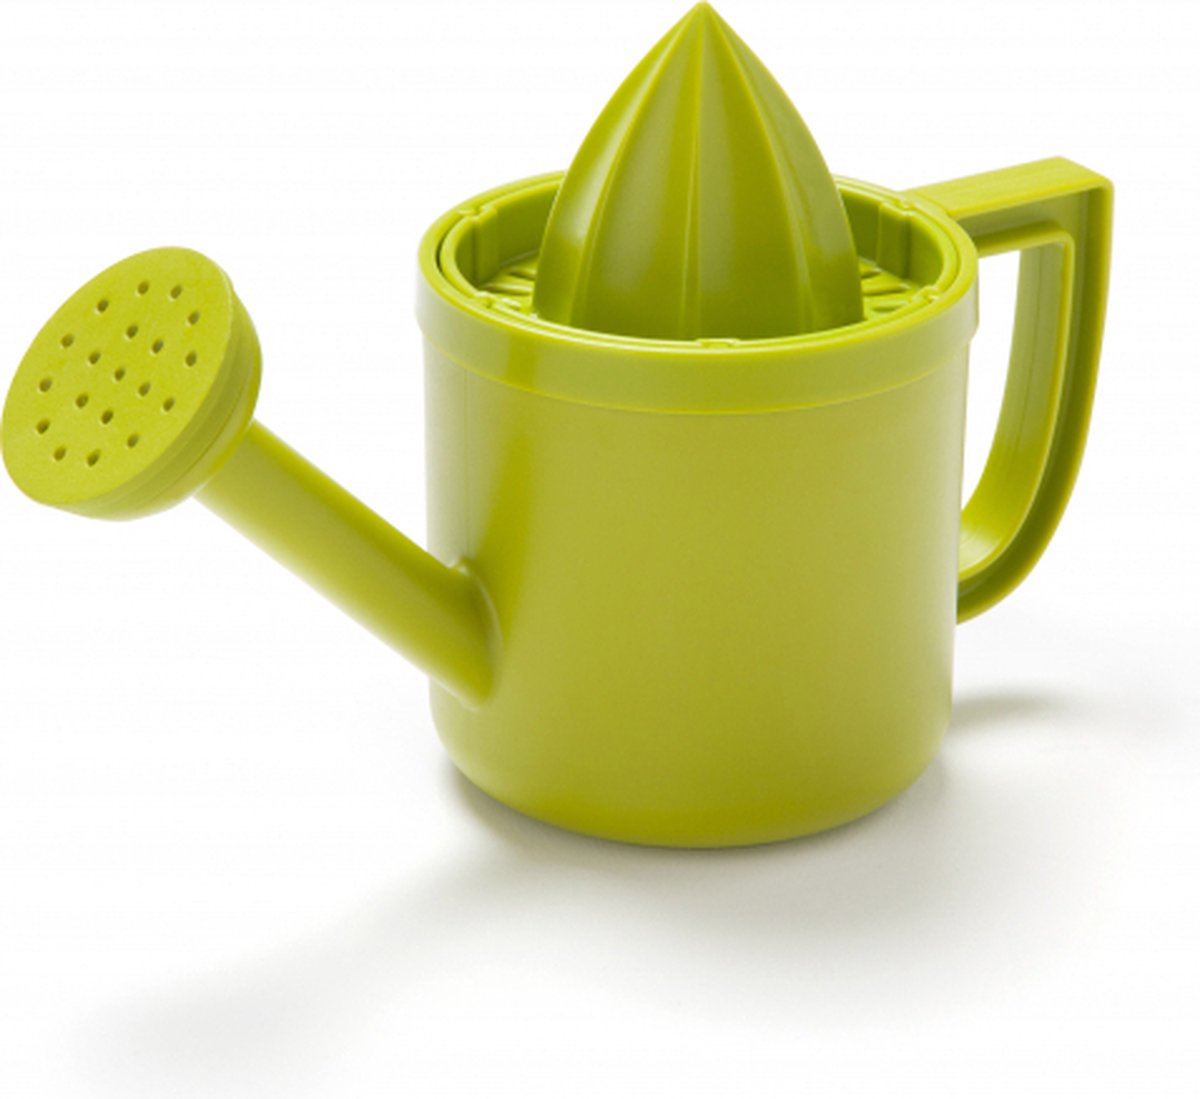 Peleg Design - Peleg Design Lemoniere Juicer